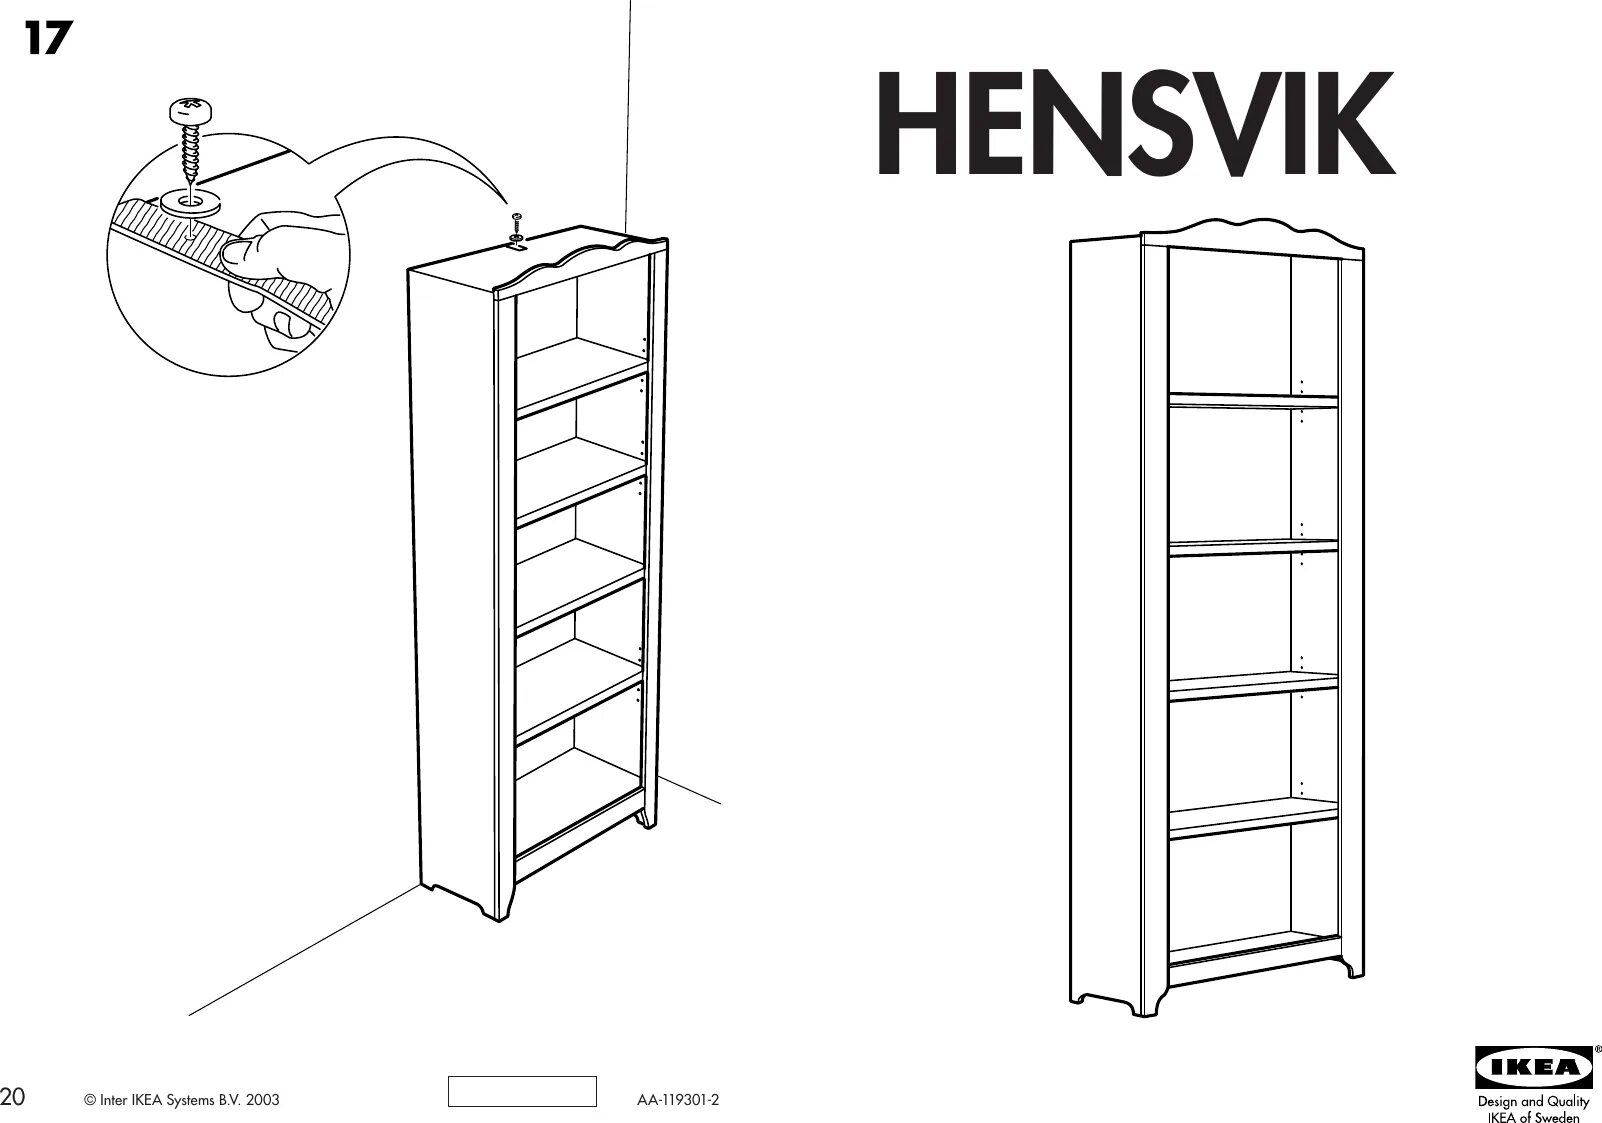 Стеллаж Ивар икеа сборка схема. Hensvik шкаф ikea инструкция. Hensvik 14036 икеа инструкция по сборке. Сборка стеллажа икеа